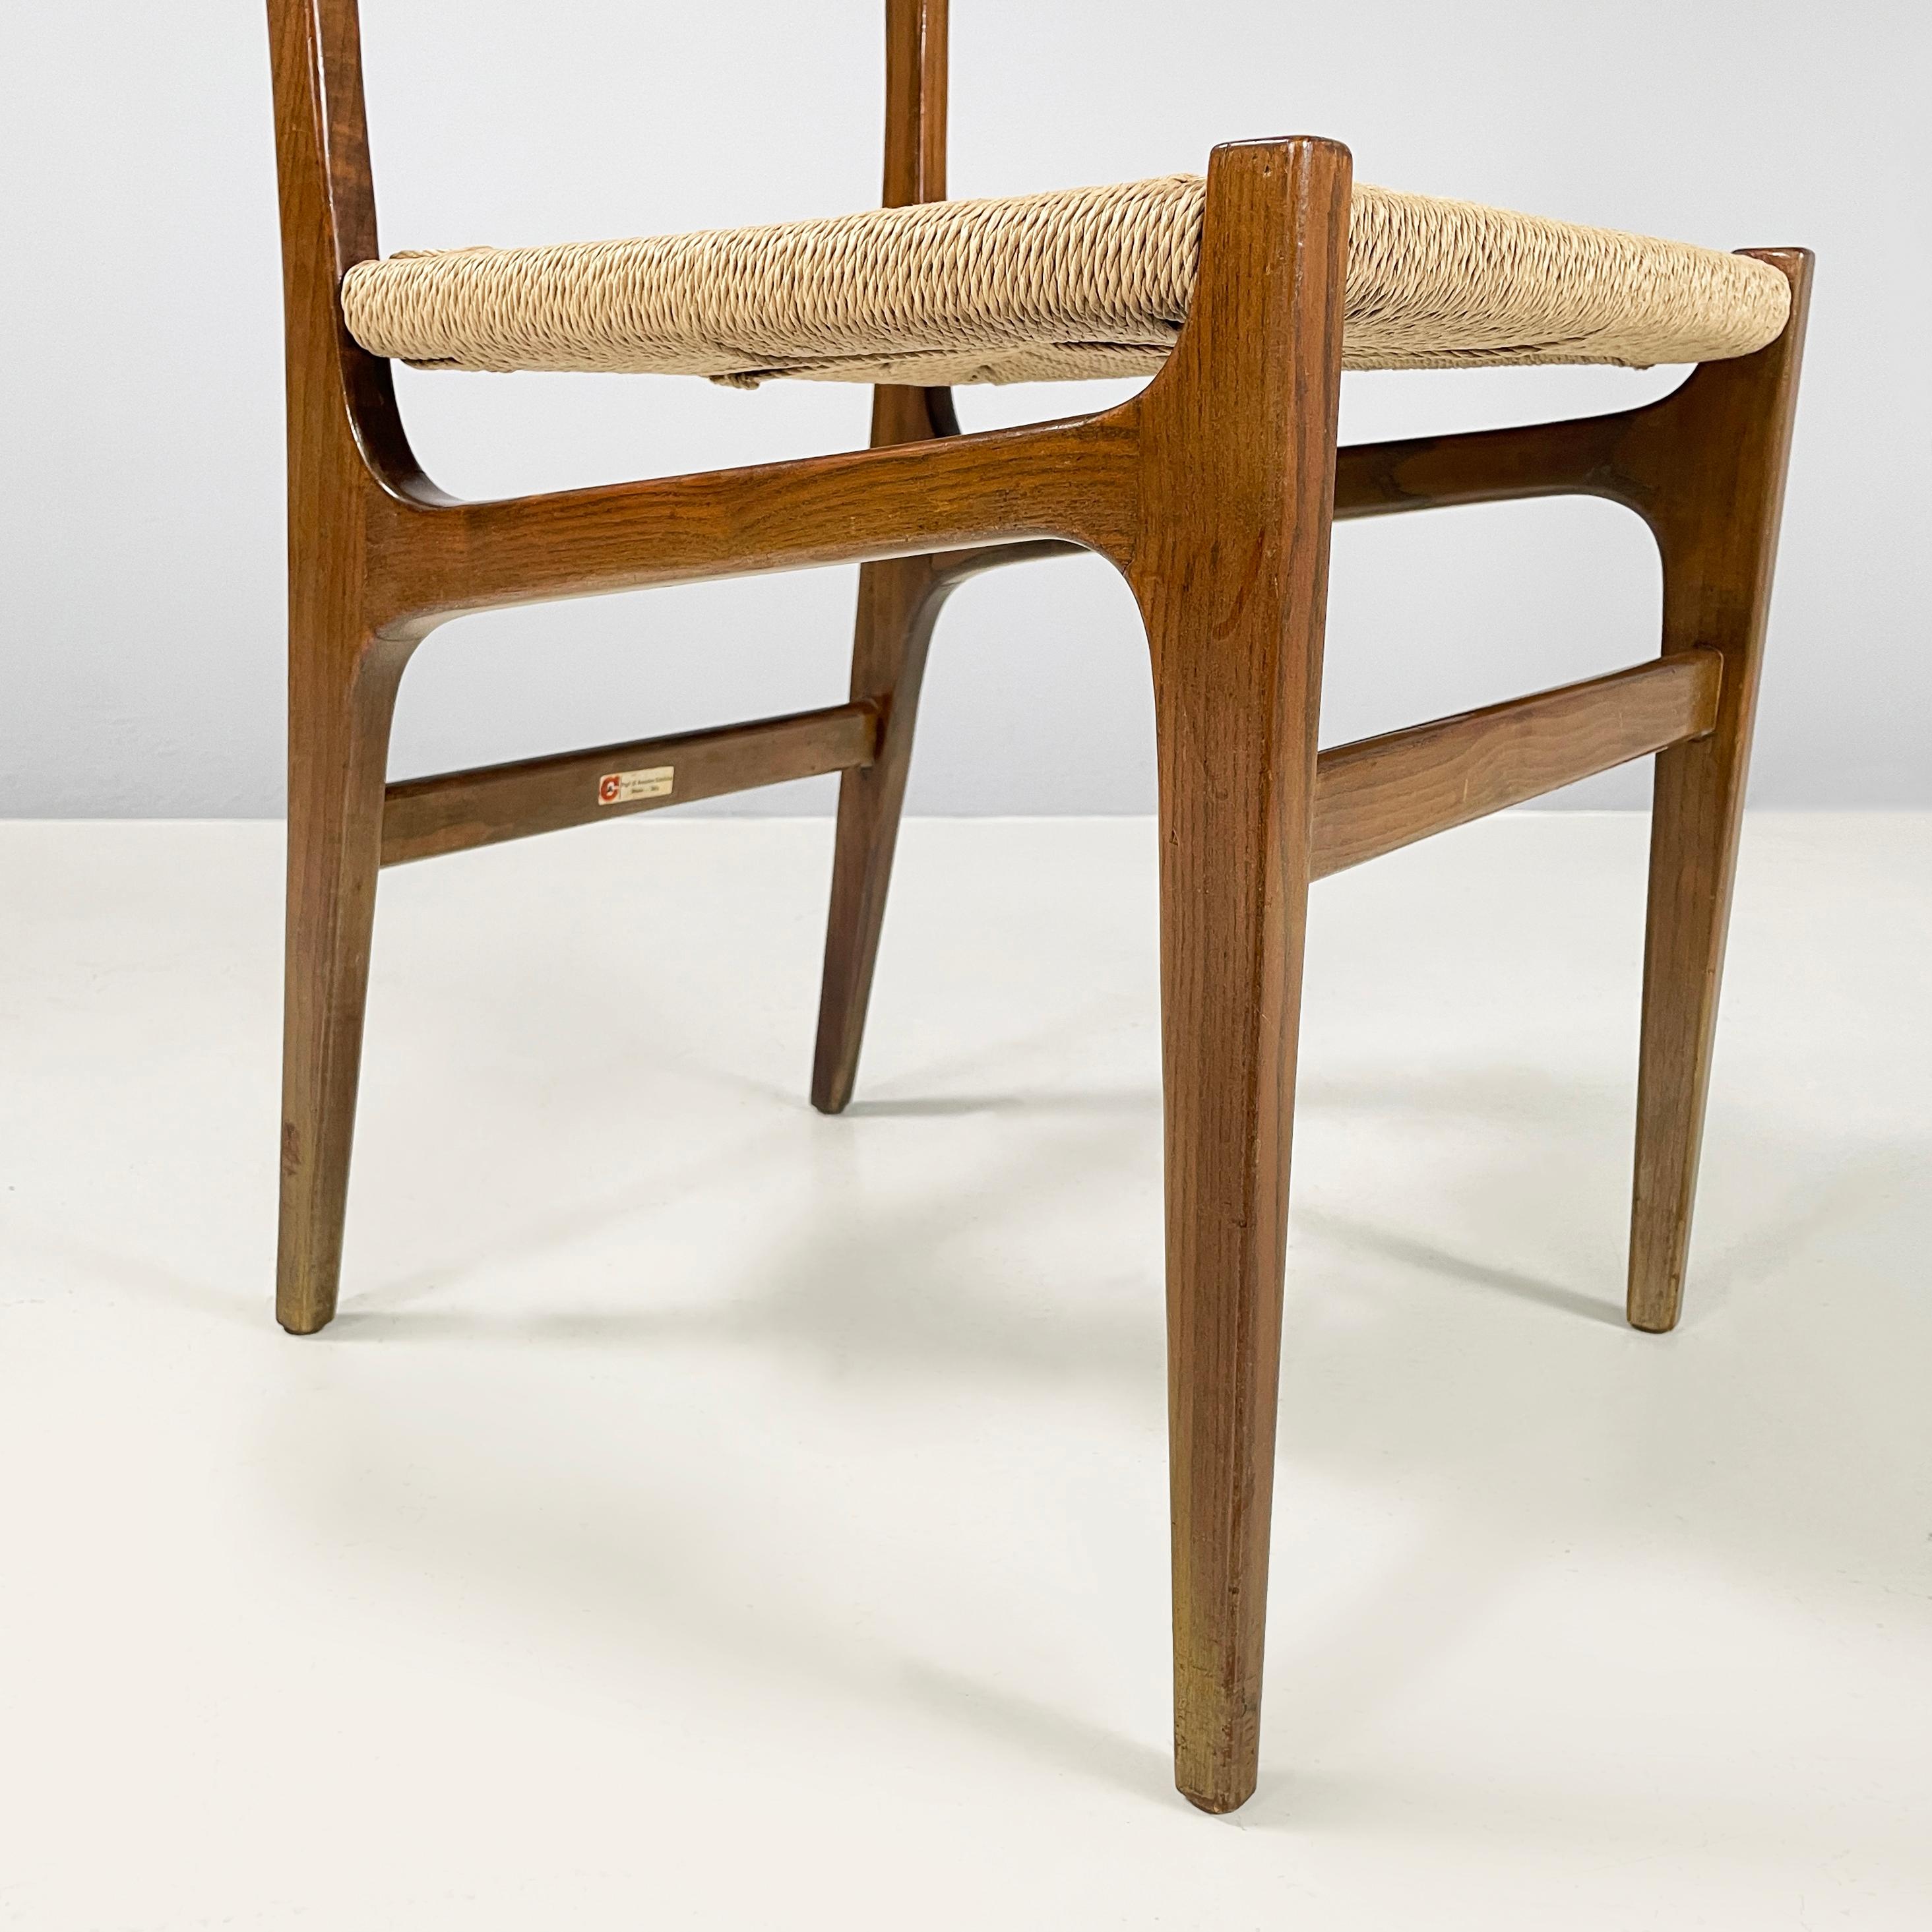 Italian mid-century Chairs Parco dei Principi hotel by Gio Ponti Cassina, 1960s For Sale 8